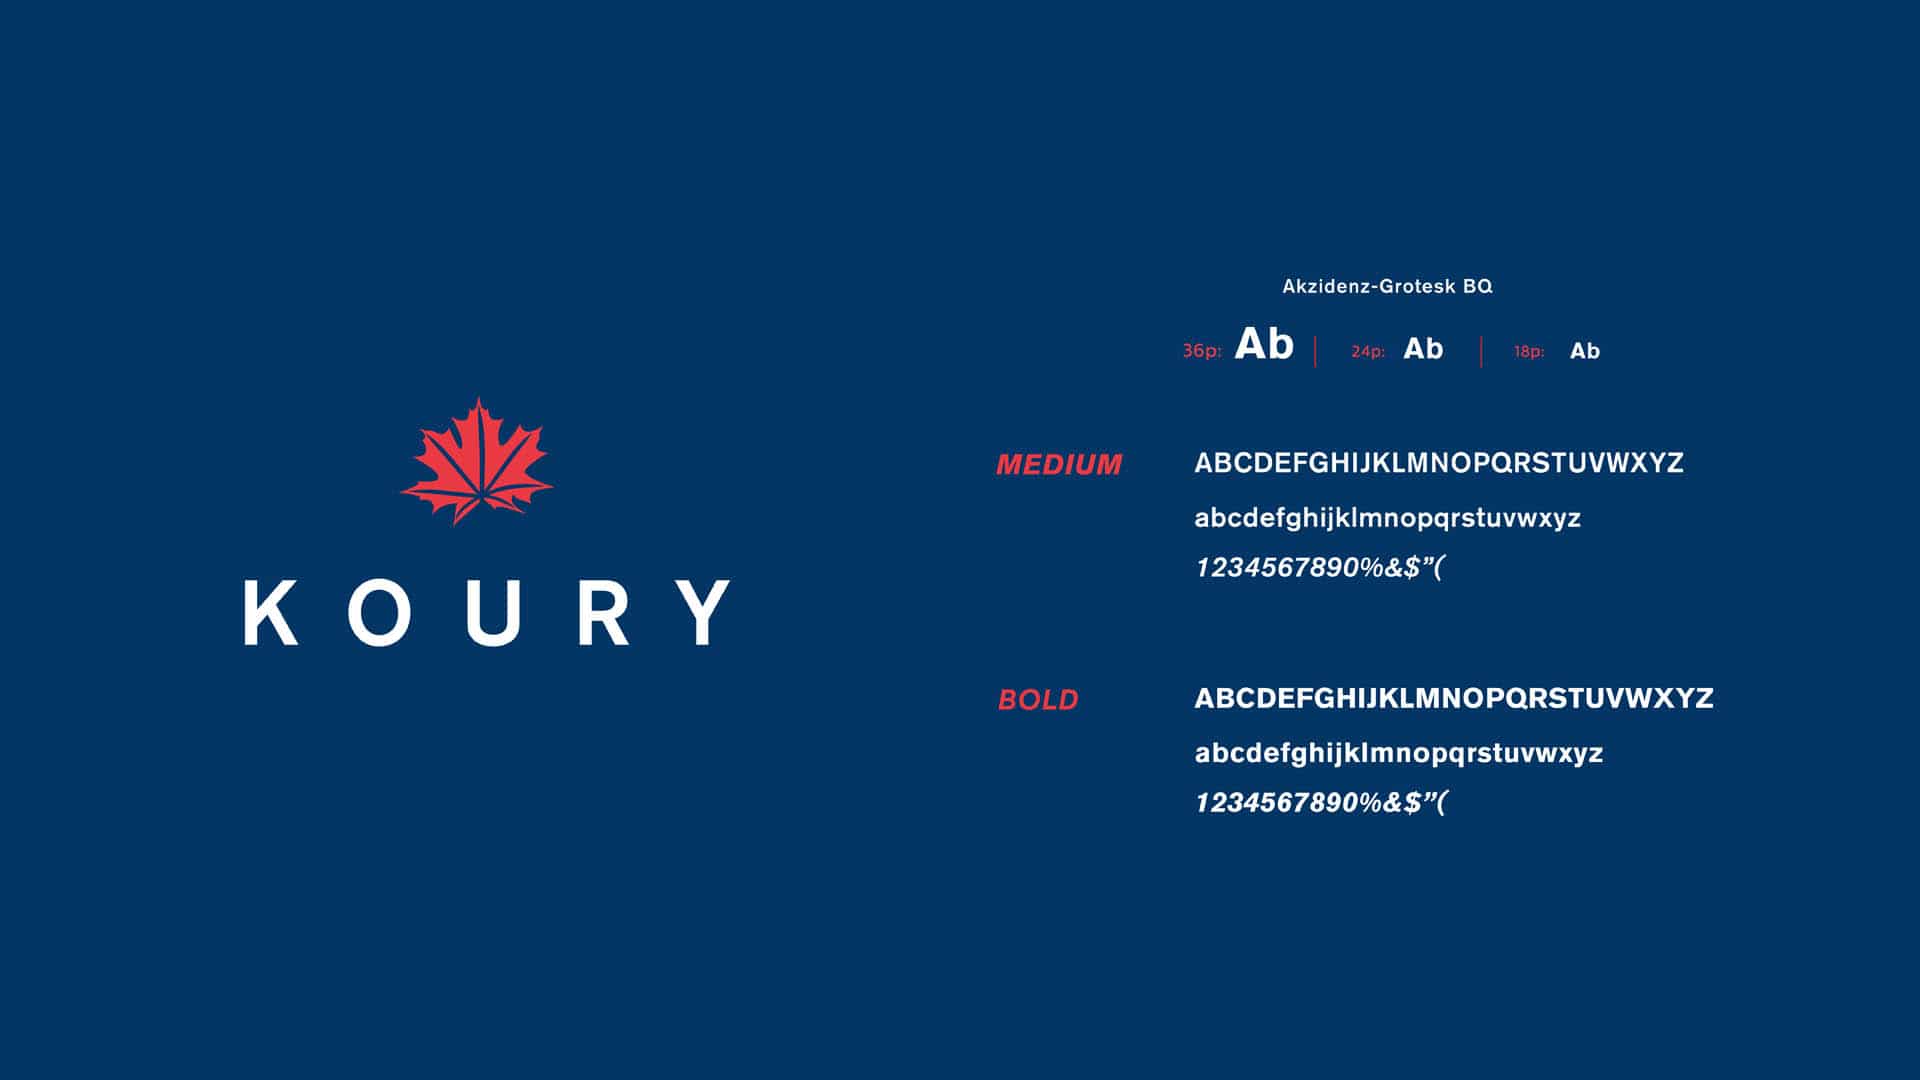 Koury Typography 01